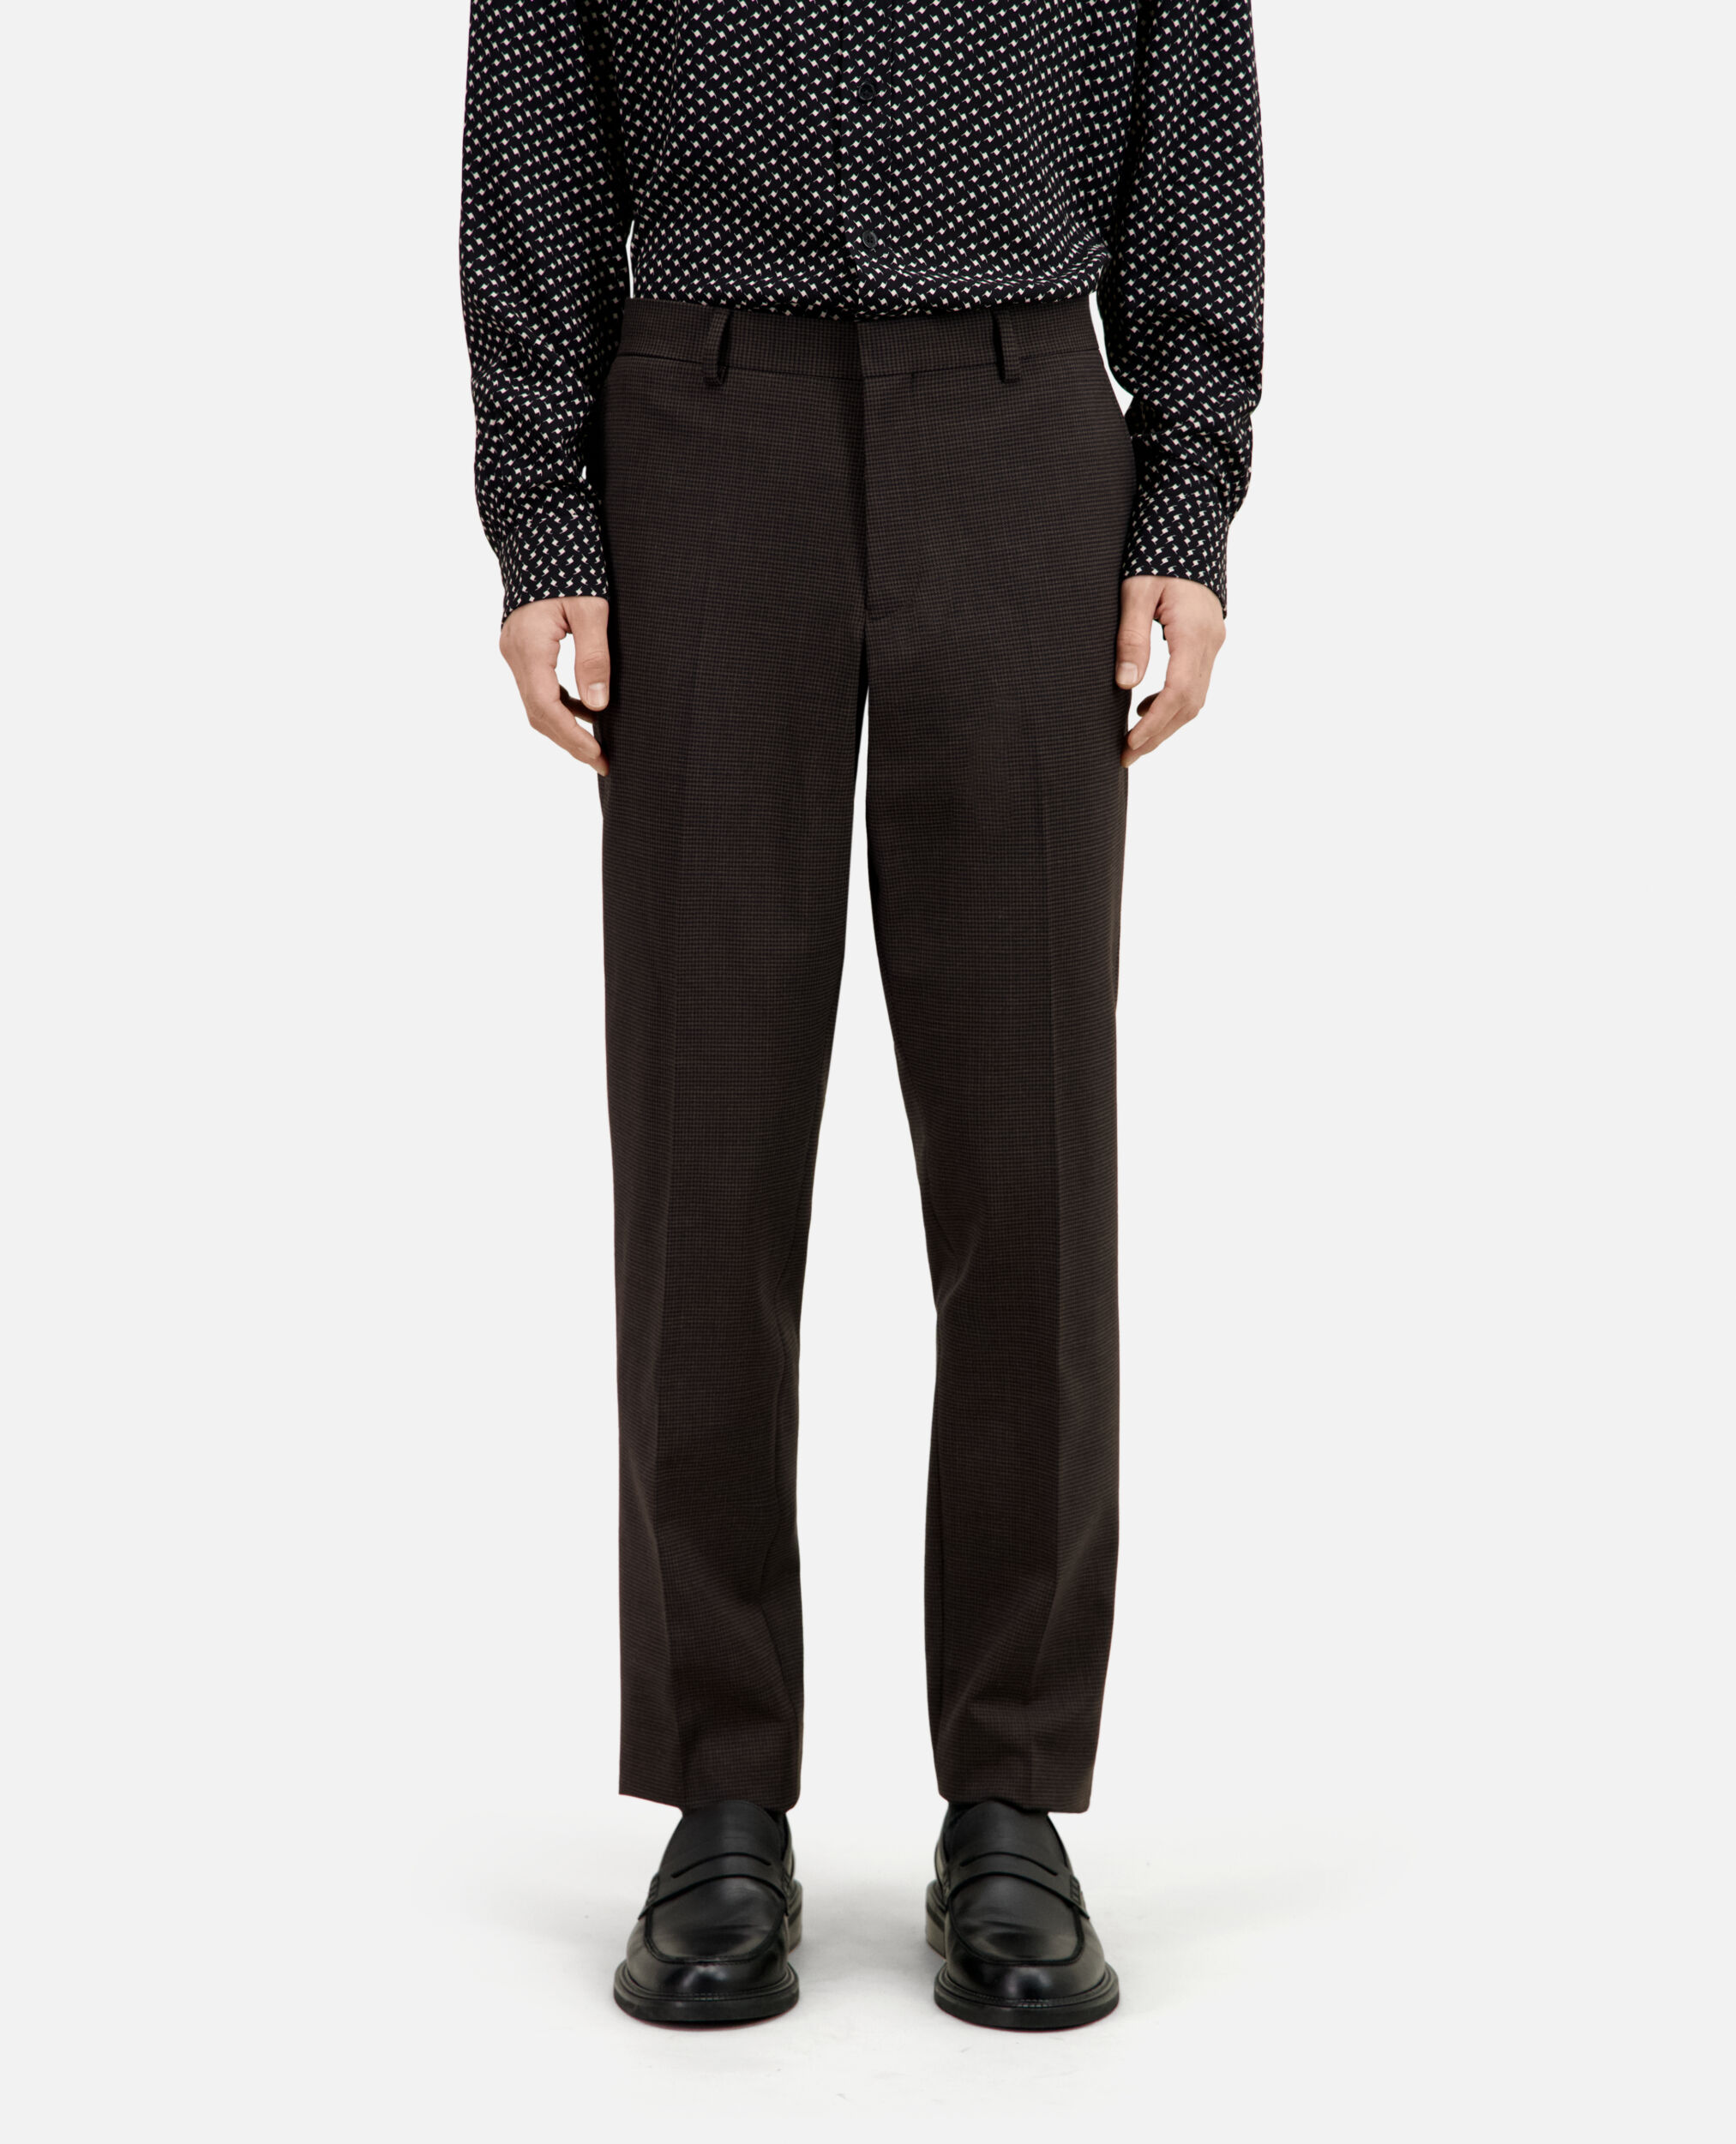 Pantalón traje pata gallo marrón lana, BROWN / BLACK, hi-res image number null